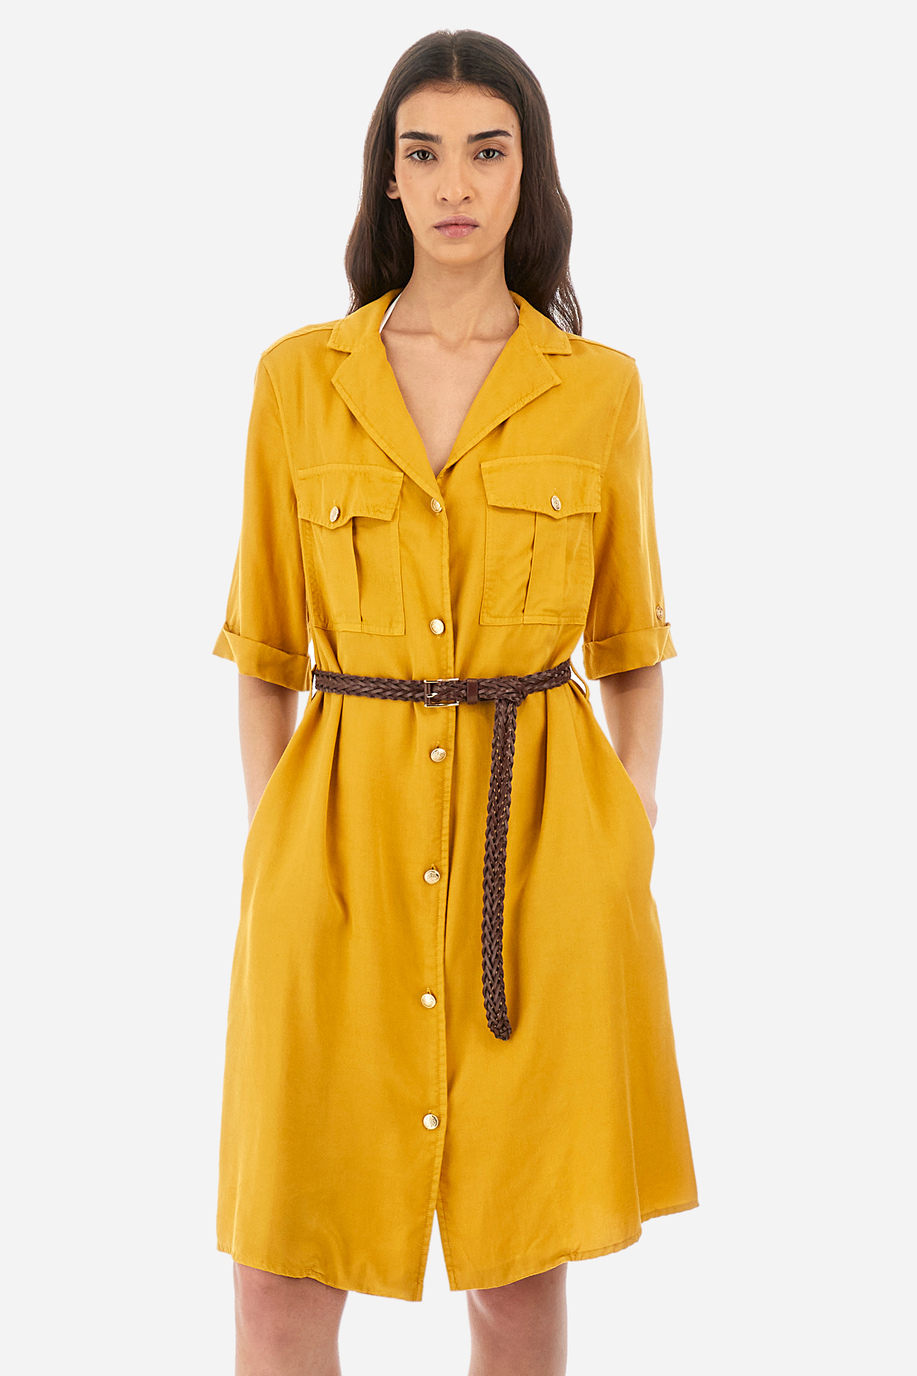 Kurzärmeliges Kleid aus Tencel - Yeruscha - Kleider | La Martina - Official Online Shop